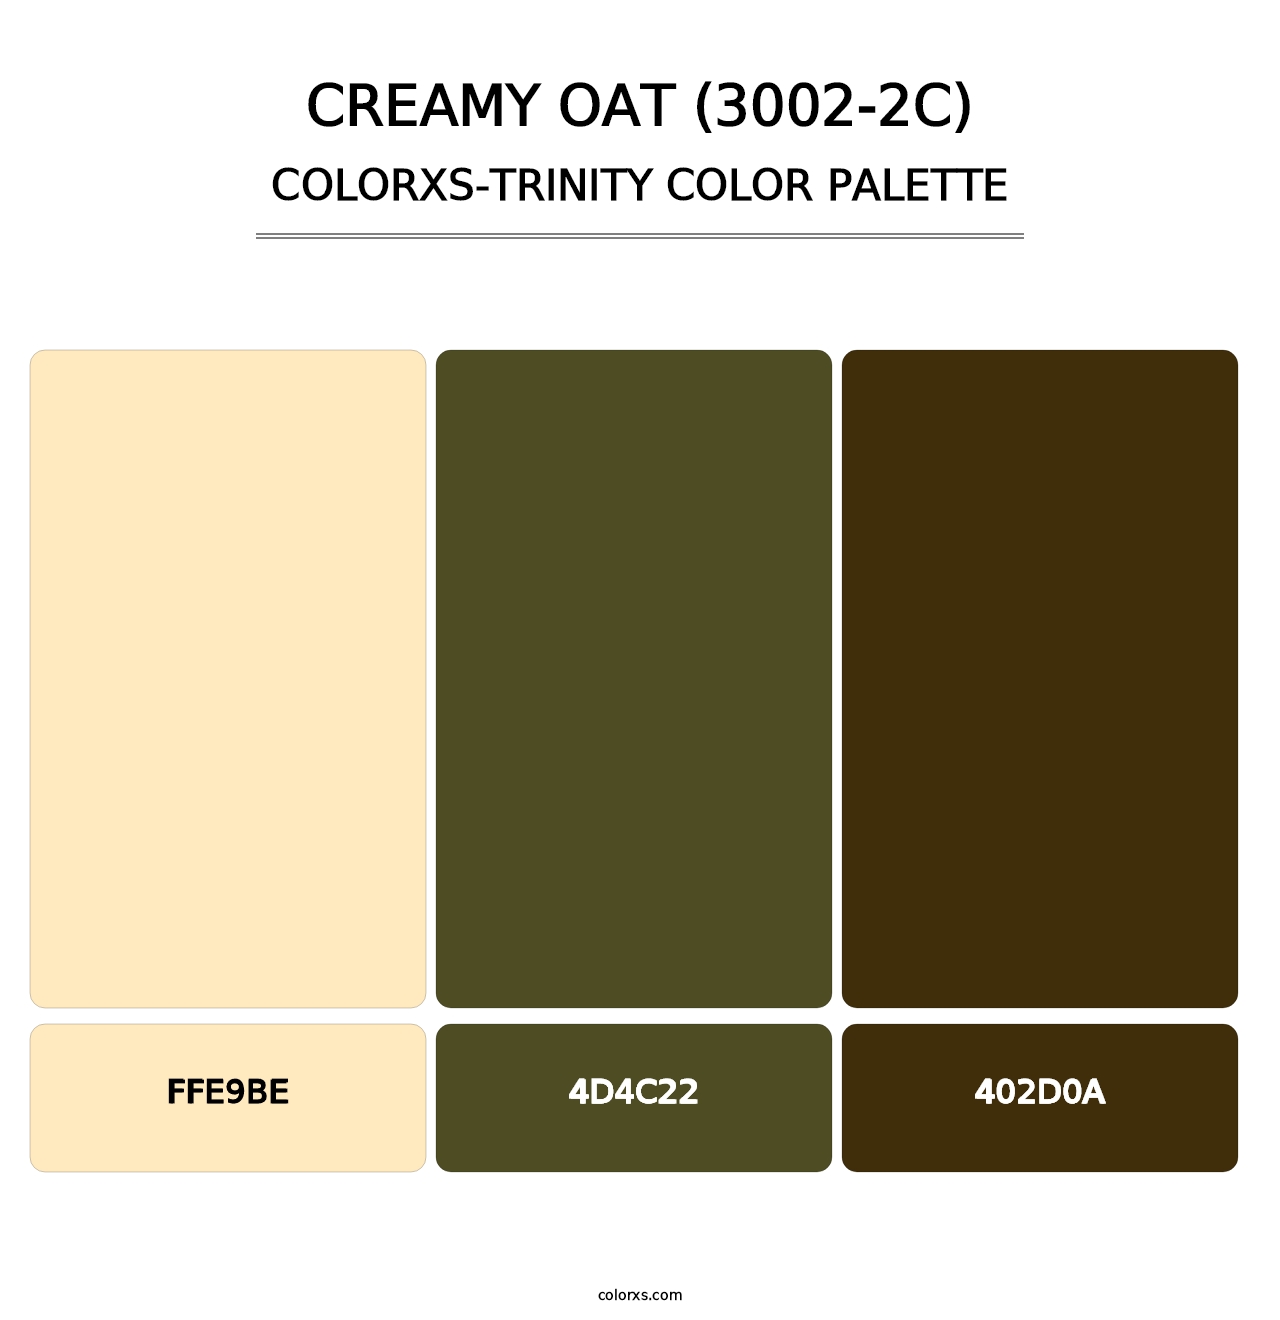 Creamy Oat (3002-2C) - Colorxs Trinity Palette